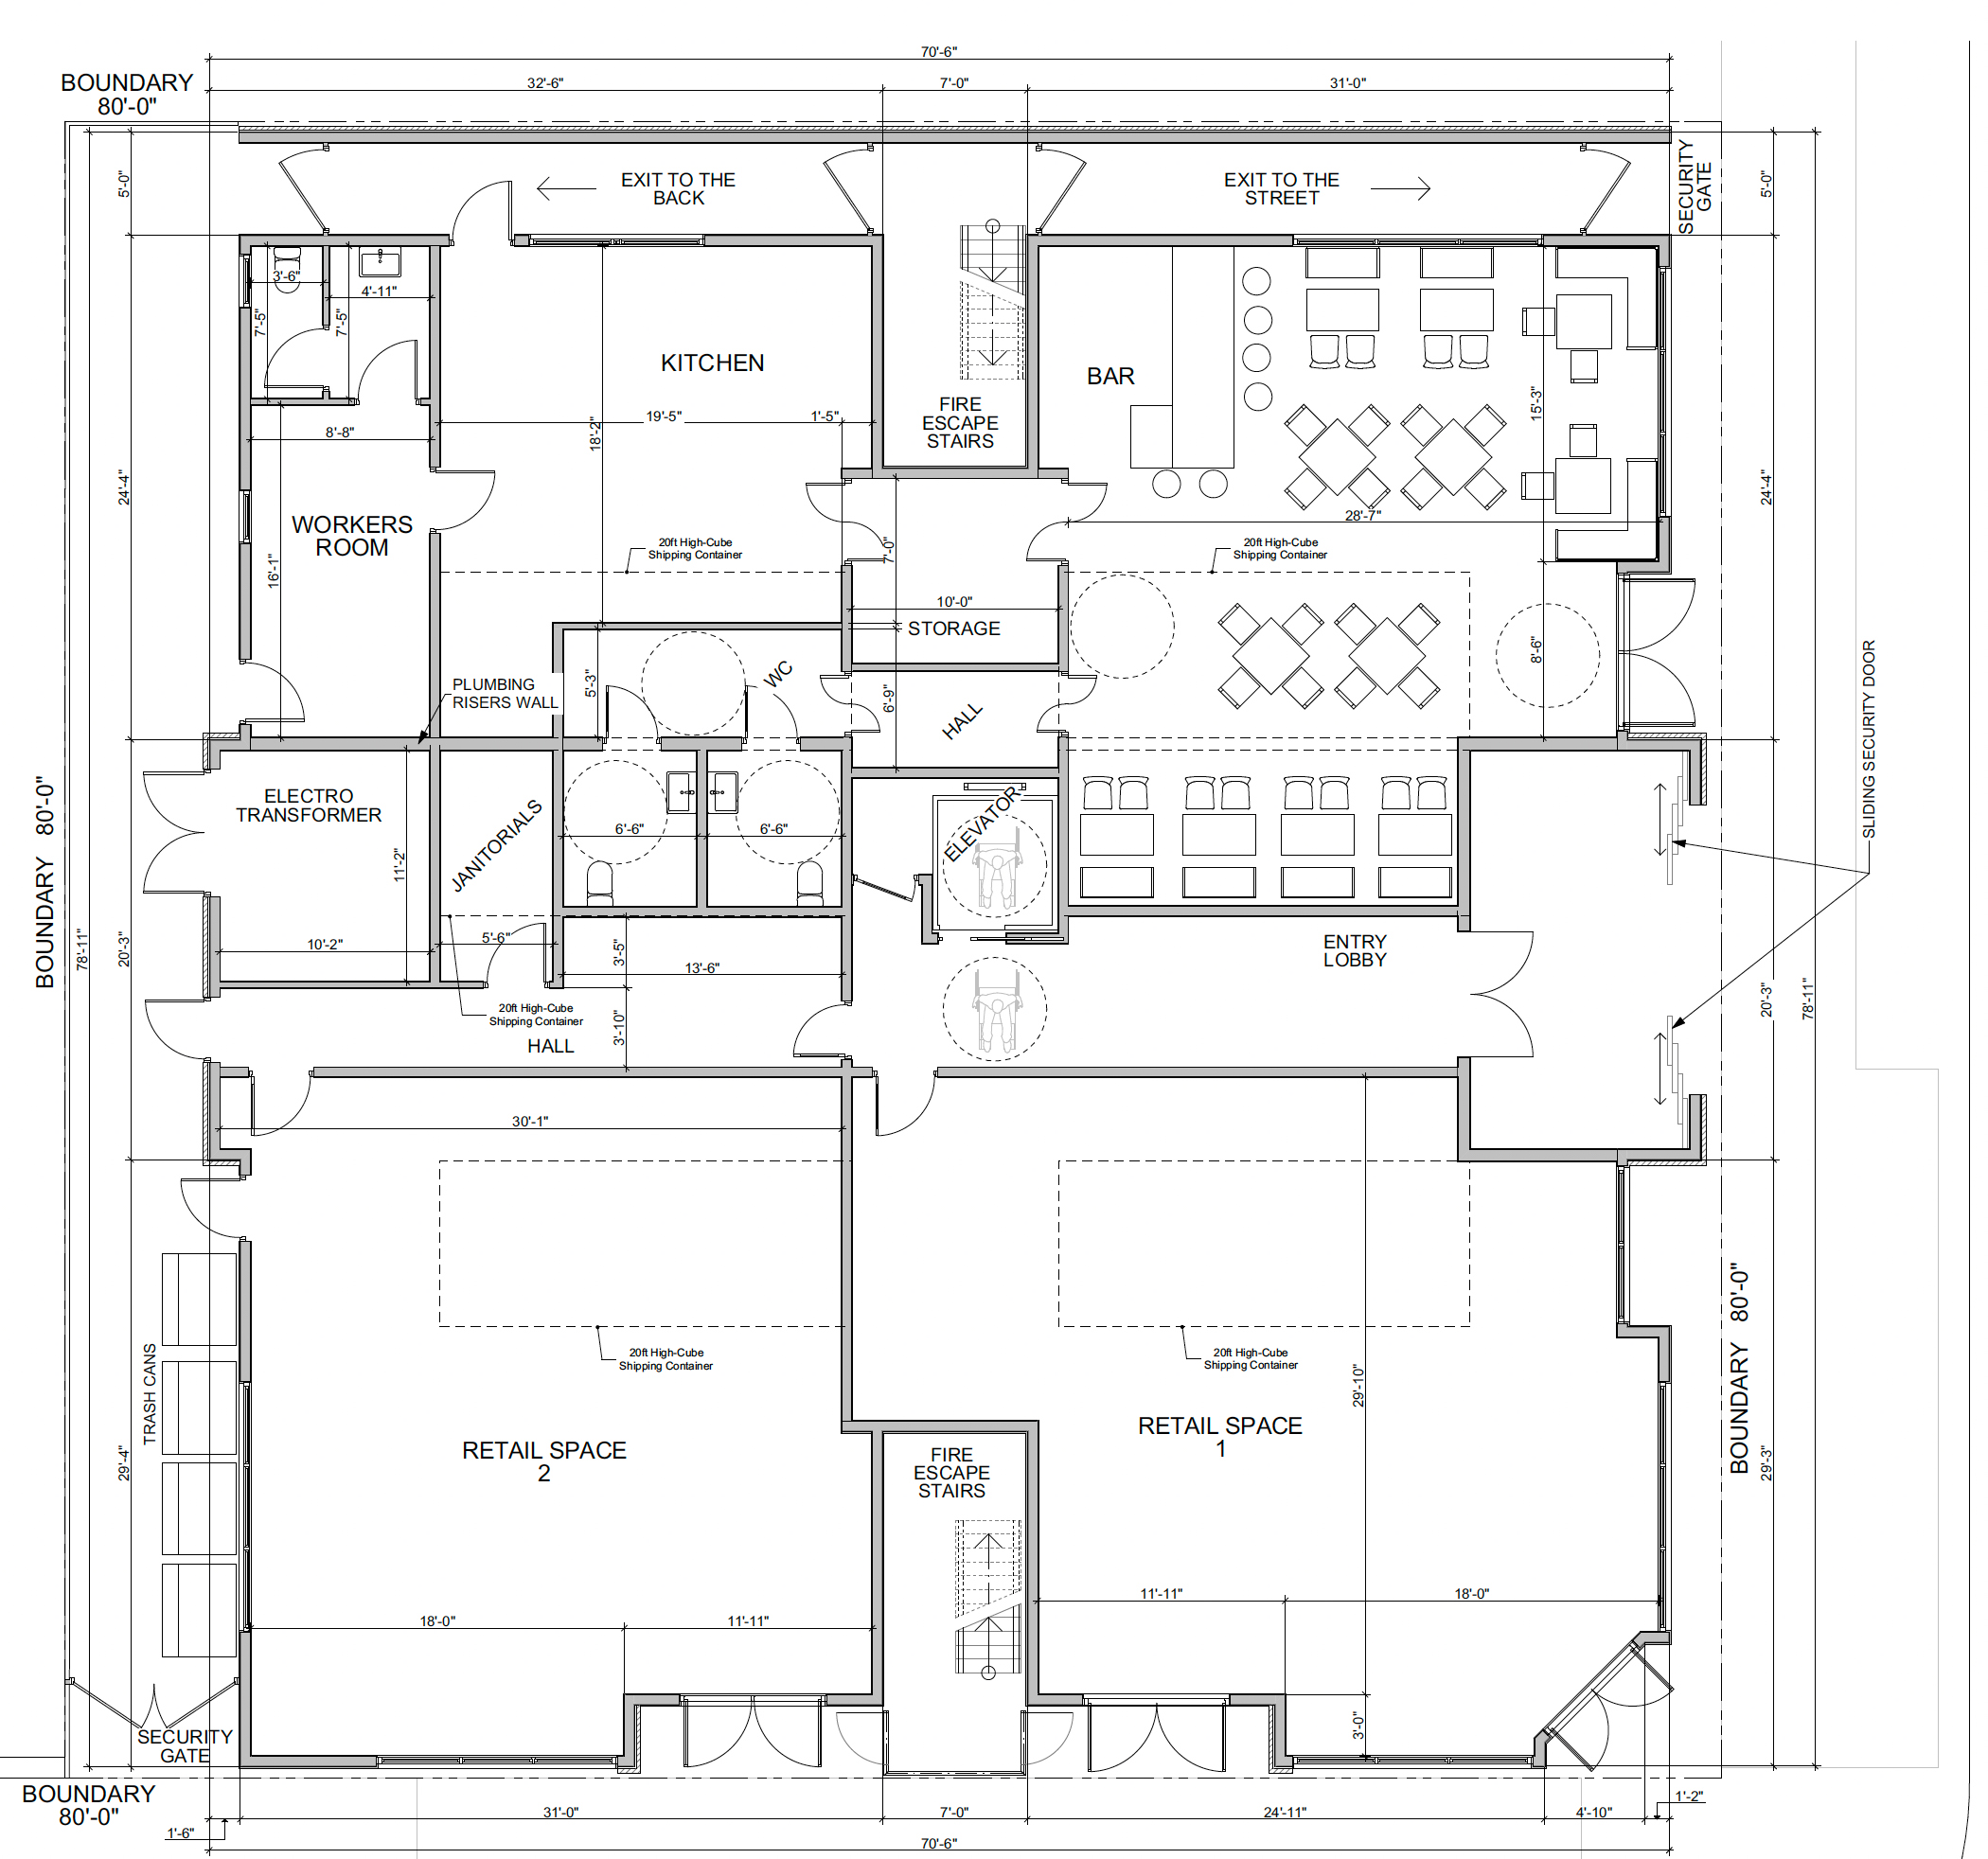 330 12th Street ground-level floor plan, illustration courtesy the City of Sacramento